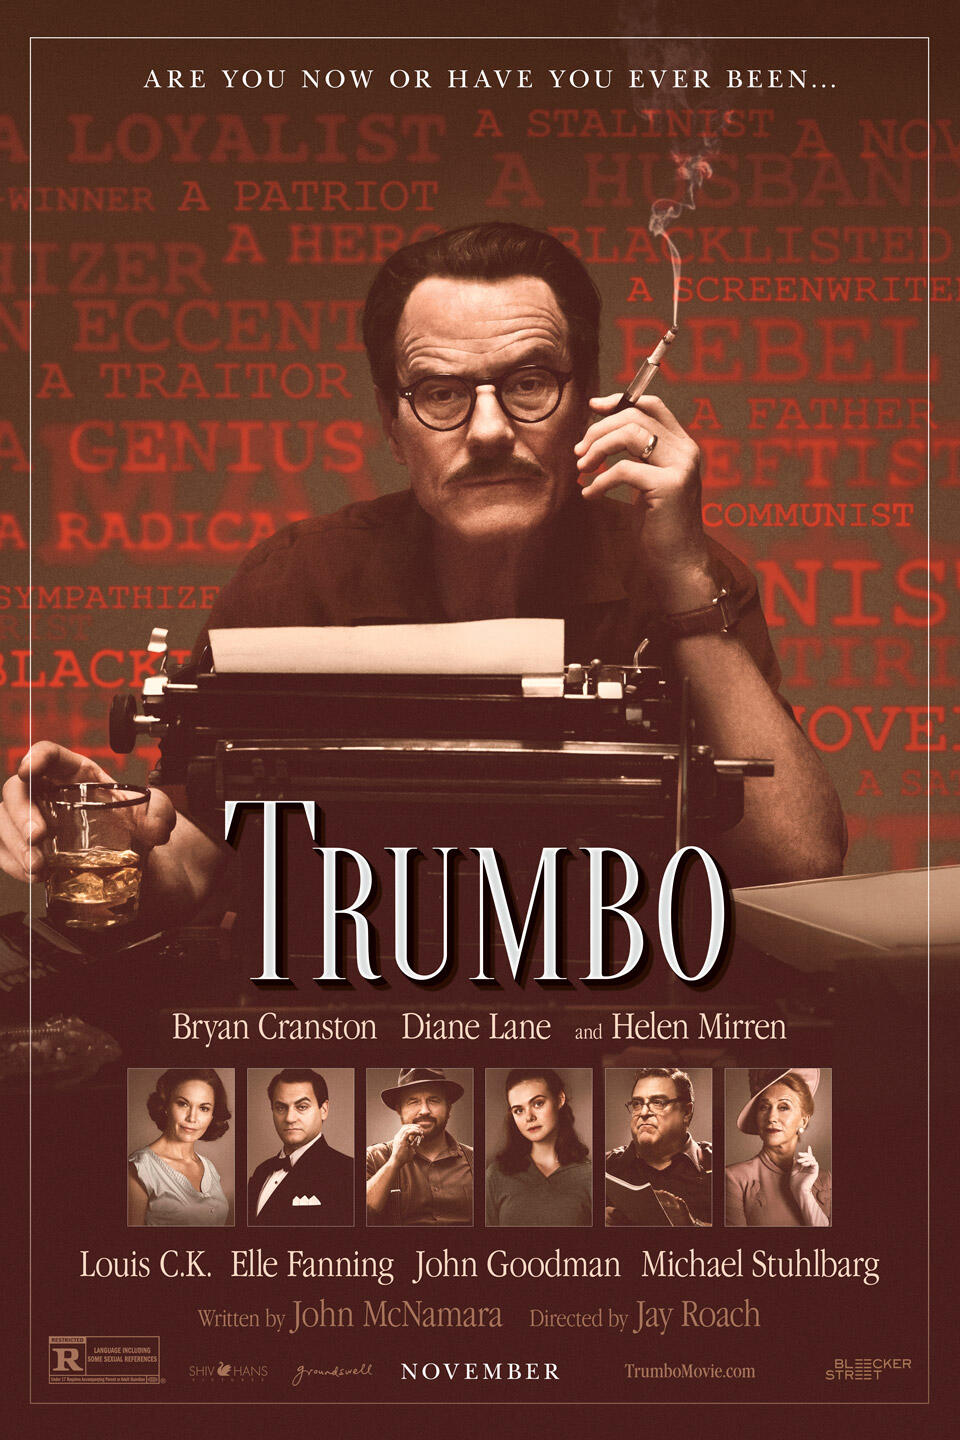 Trumbo (2015) Movie Photos and Stills | Fandango